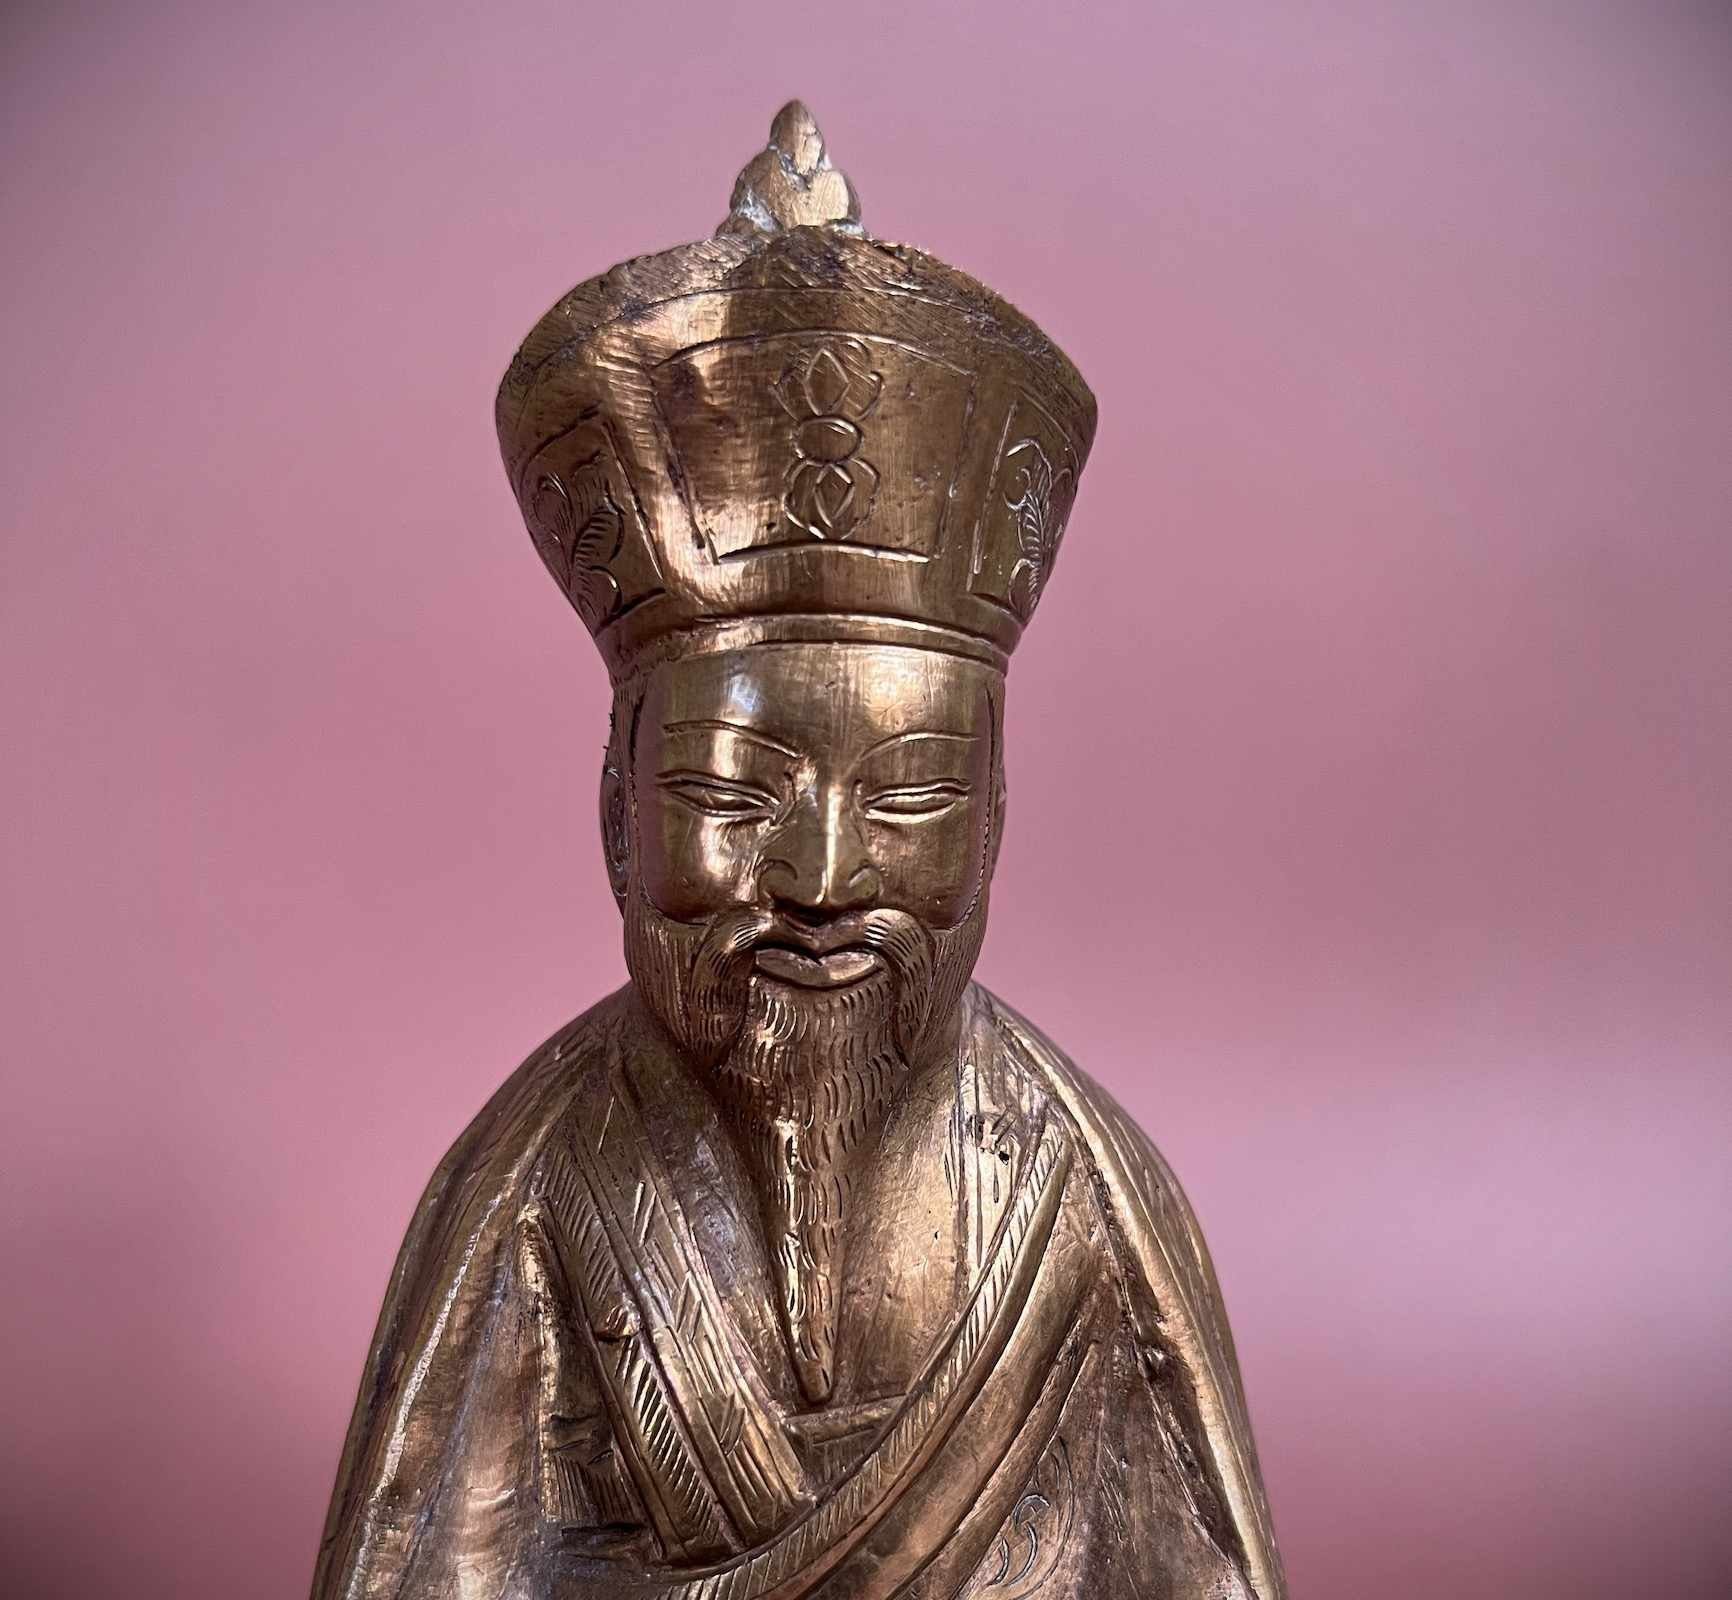 Messing Buddhafigur alte Asien Ngawang LifeStyle Shabdrung Namgyel Figur